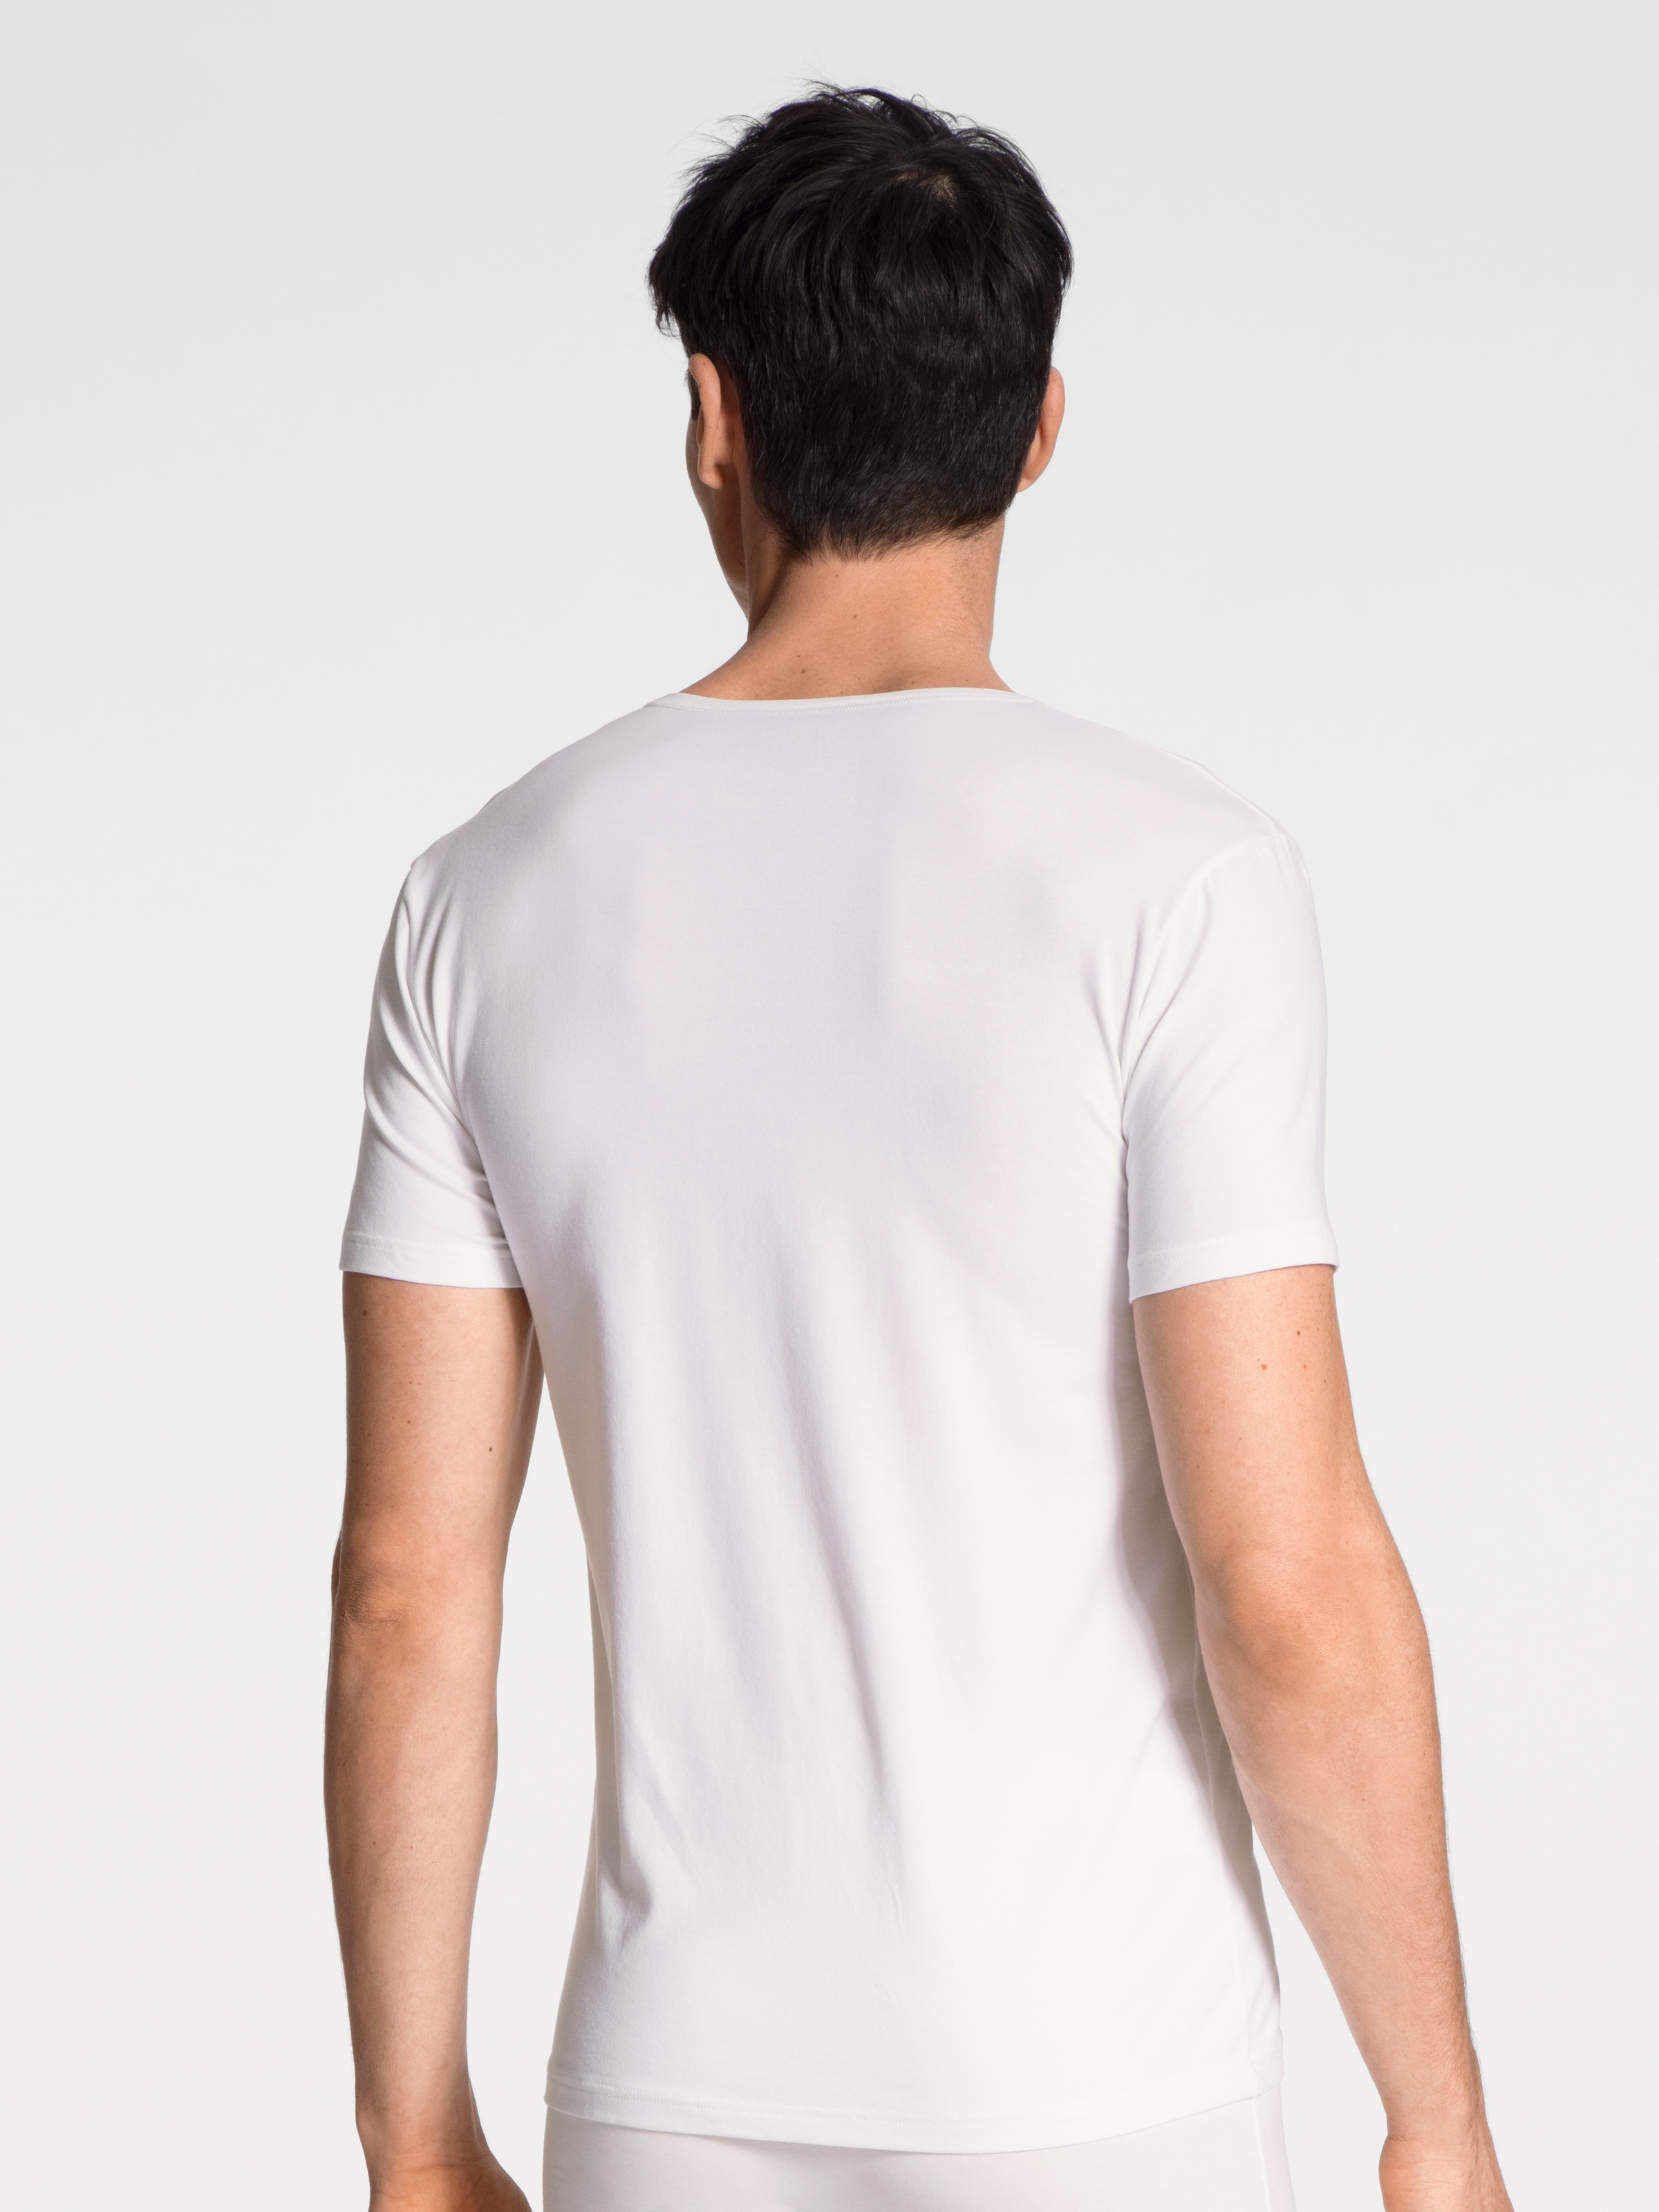 CALIDA T-Shirt »Cotton Code«, mit V-Ausschnitt und perfekter Passform